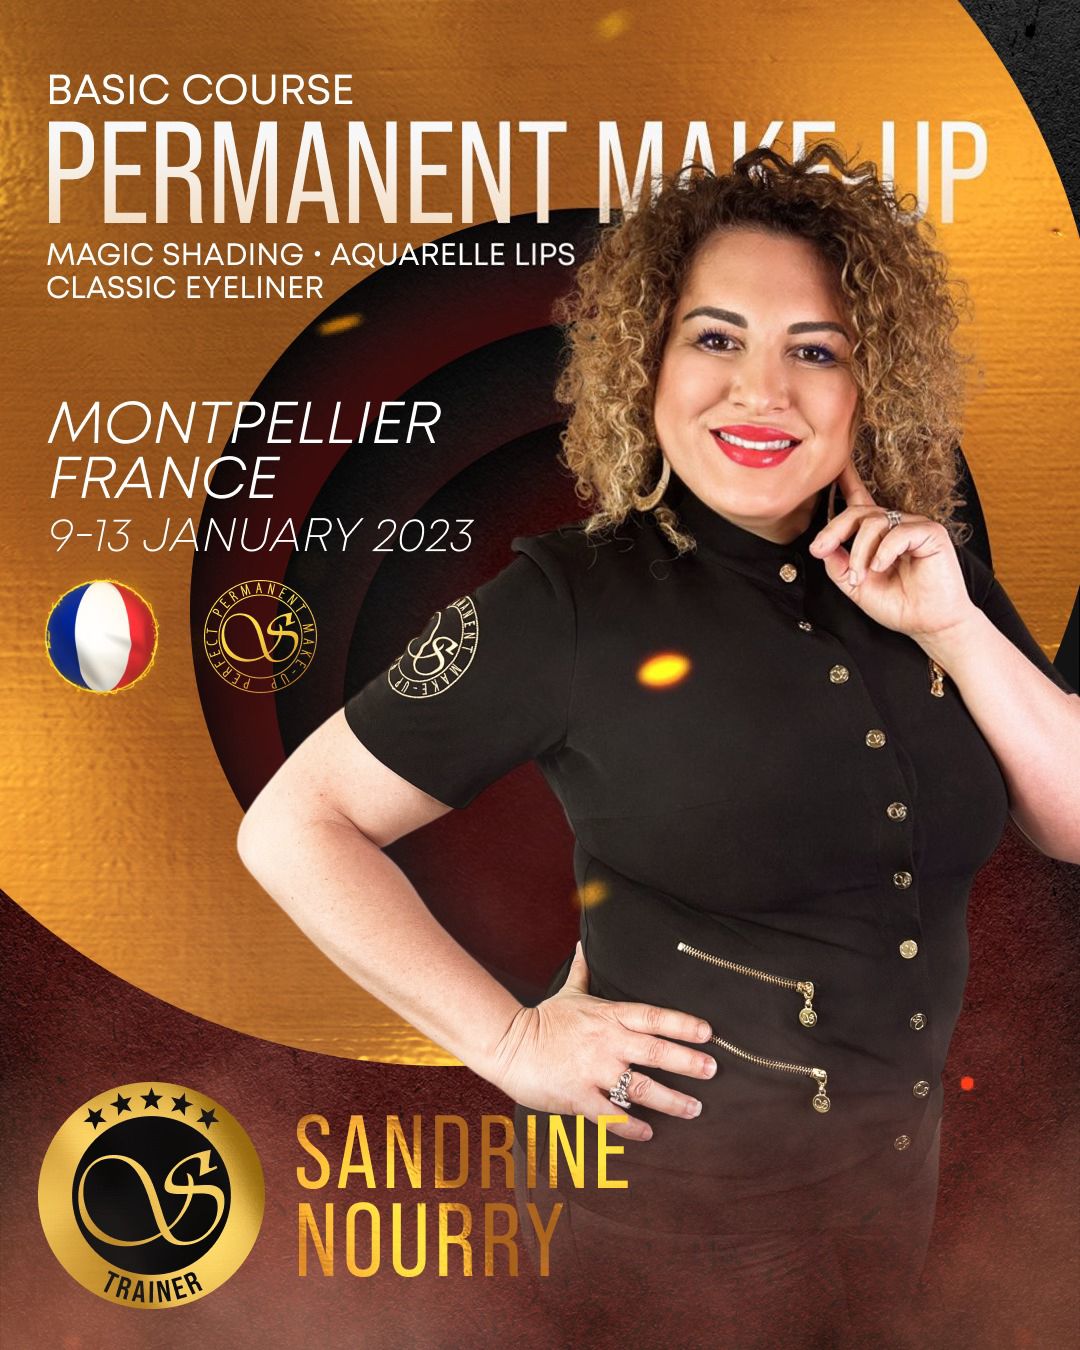 Basic course Maquillage permanent à Montpellier janvier 2023 - Sandrine Nourry Sviatoacademy Trainer